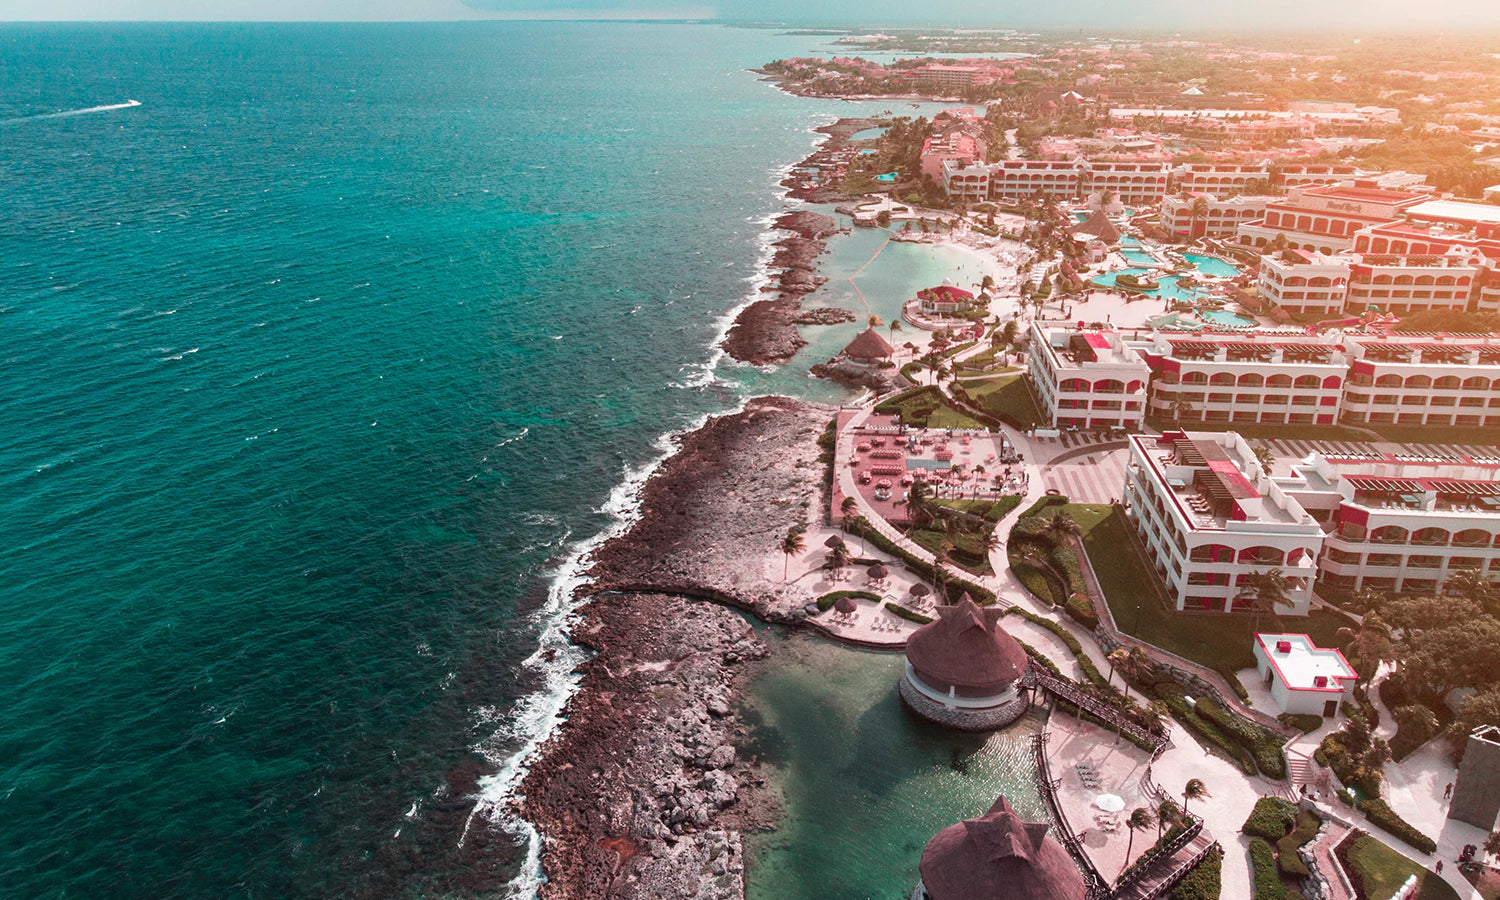 Riviera Maya – Mexico’s Sparkling Jewel